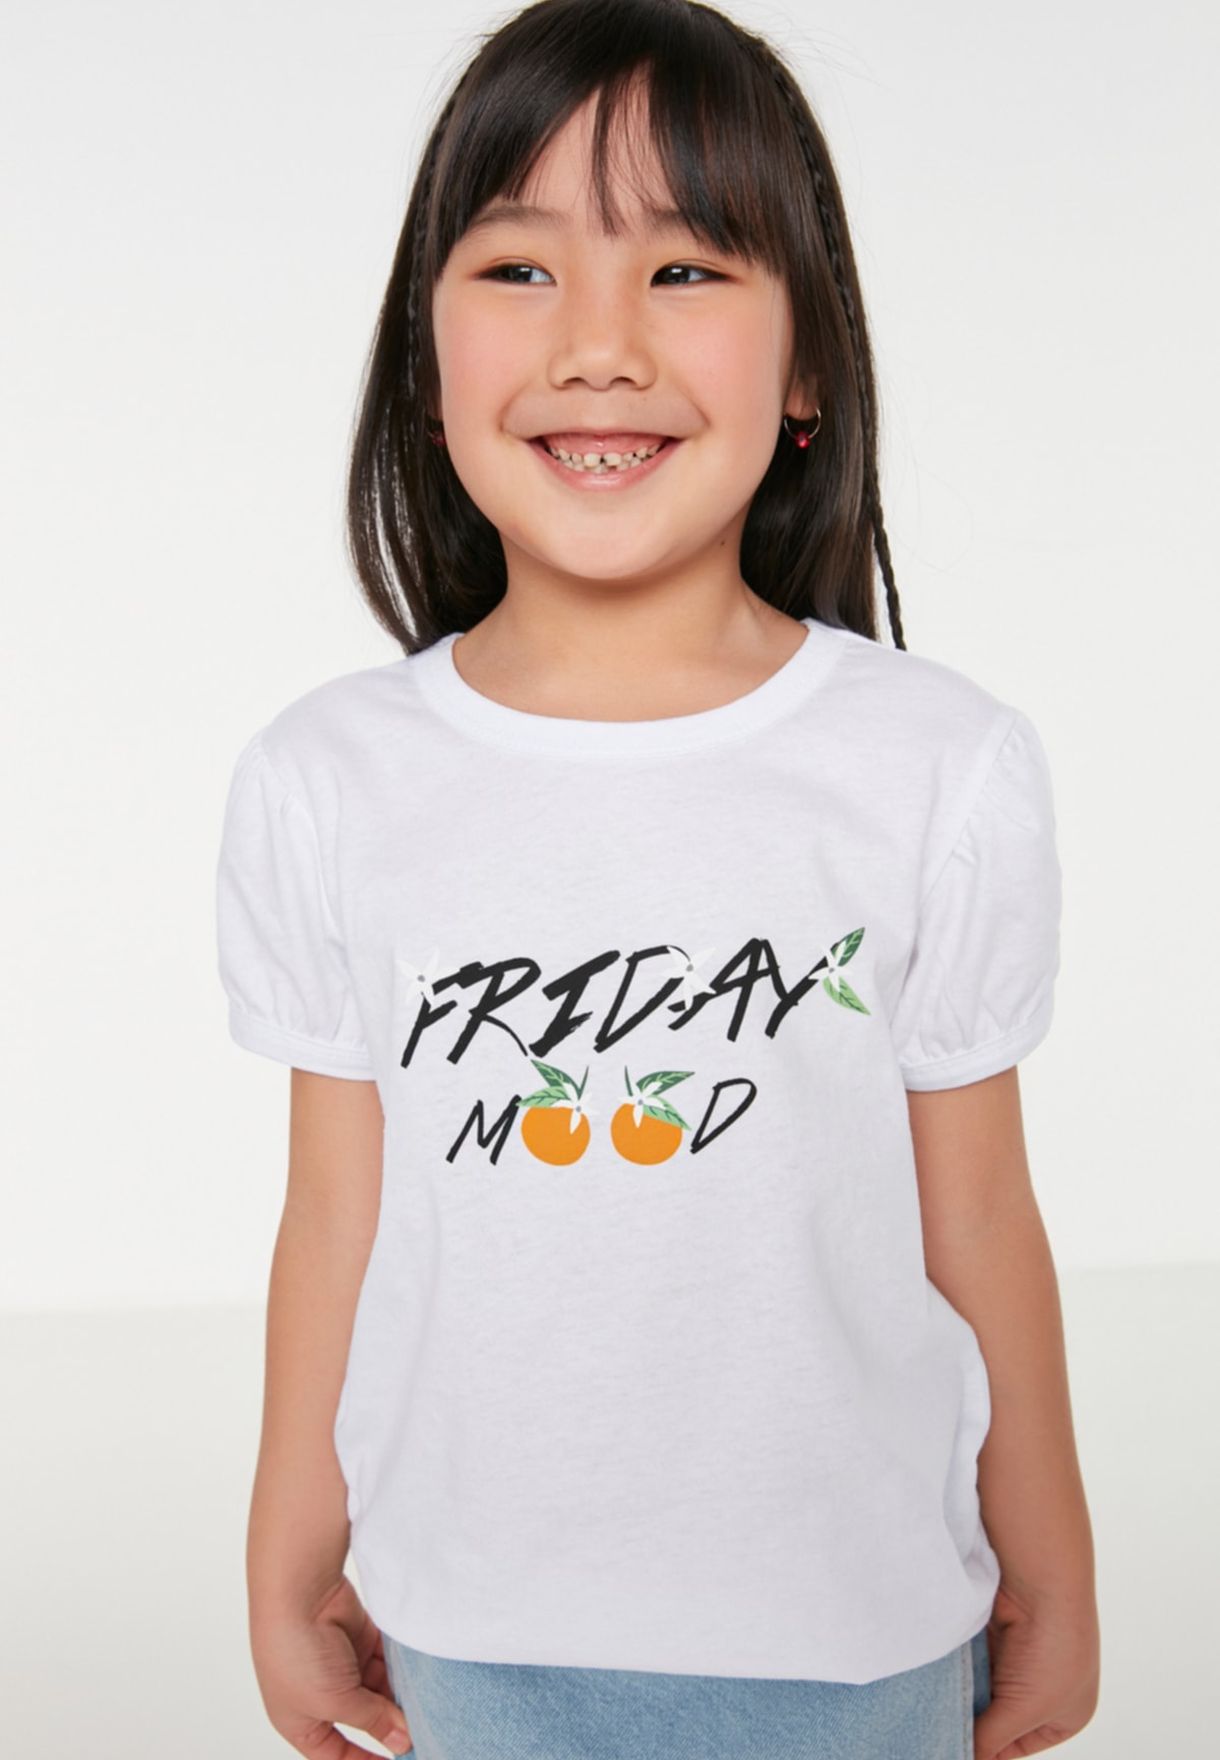 Kids Friday Mood T-Shirt